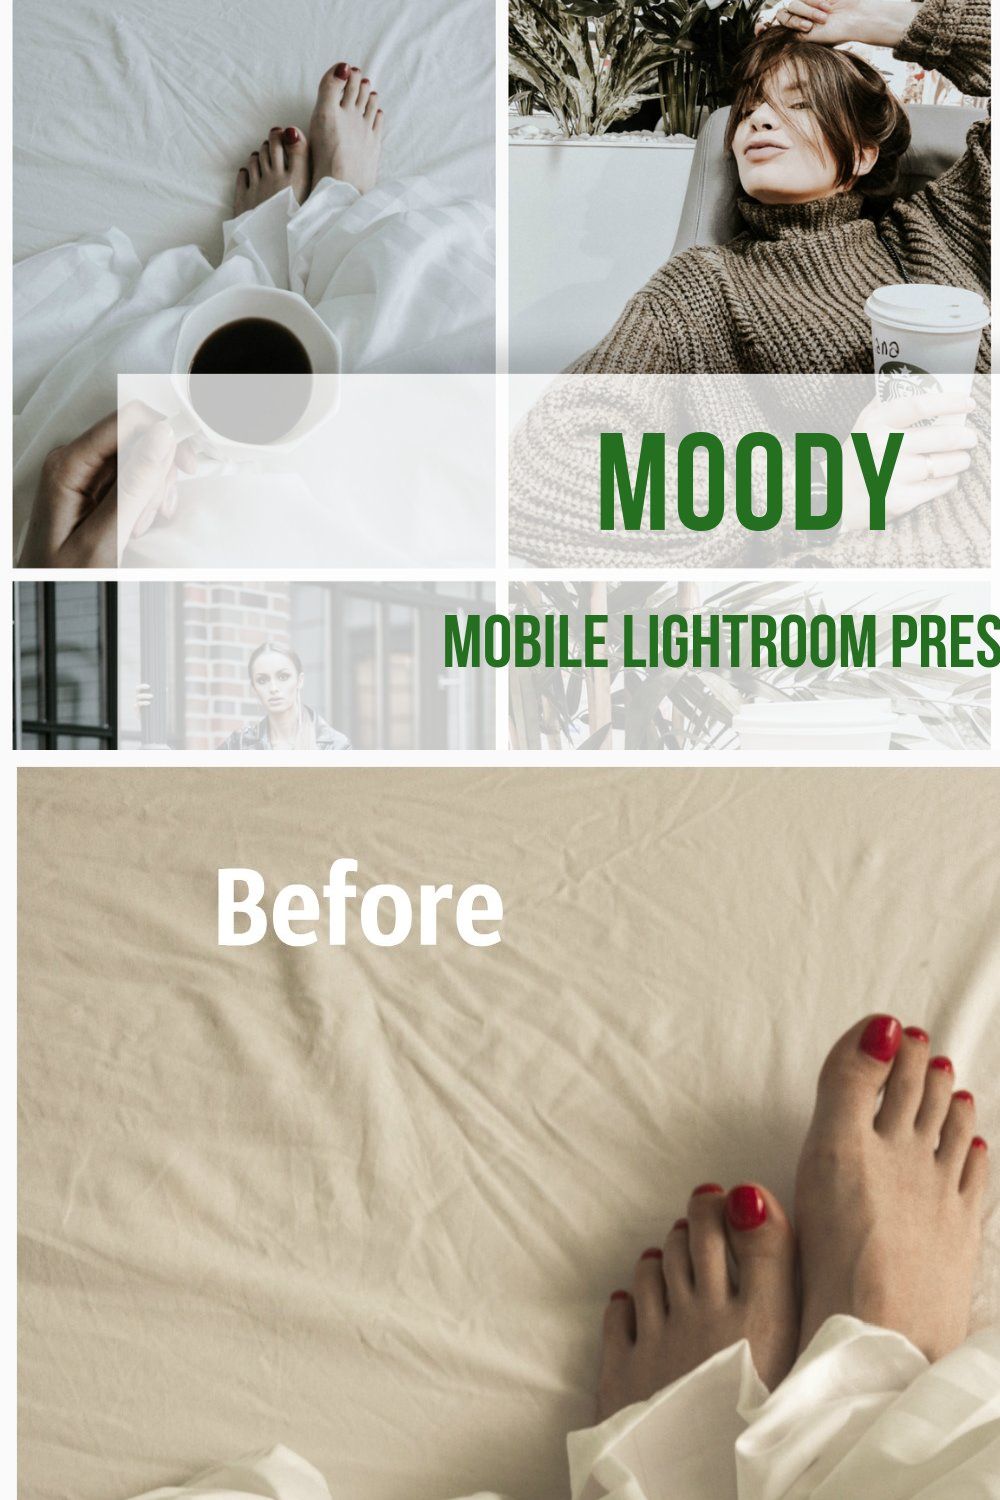 Lightroom Mobile Preset Moody pinterest preview image.